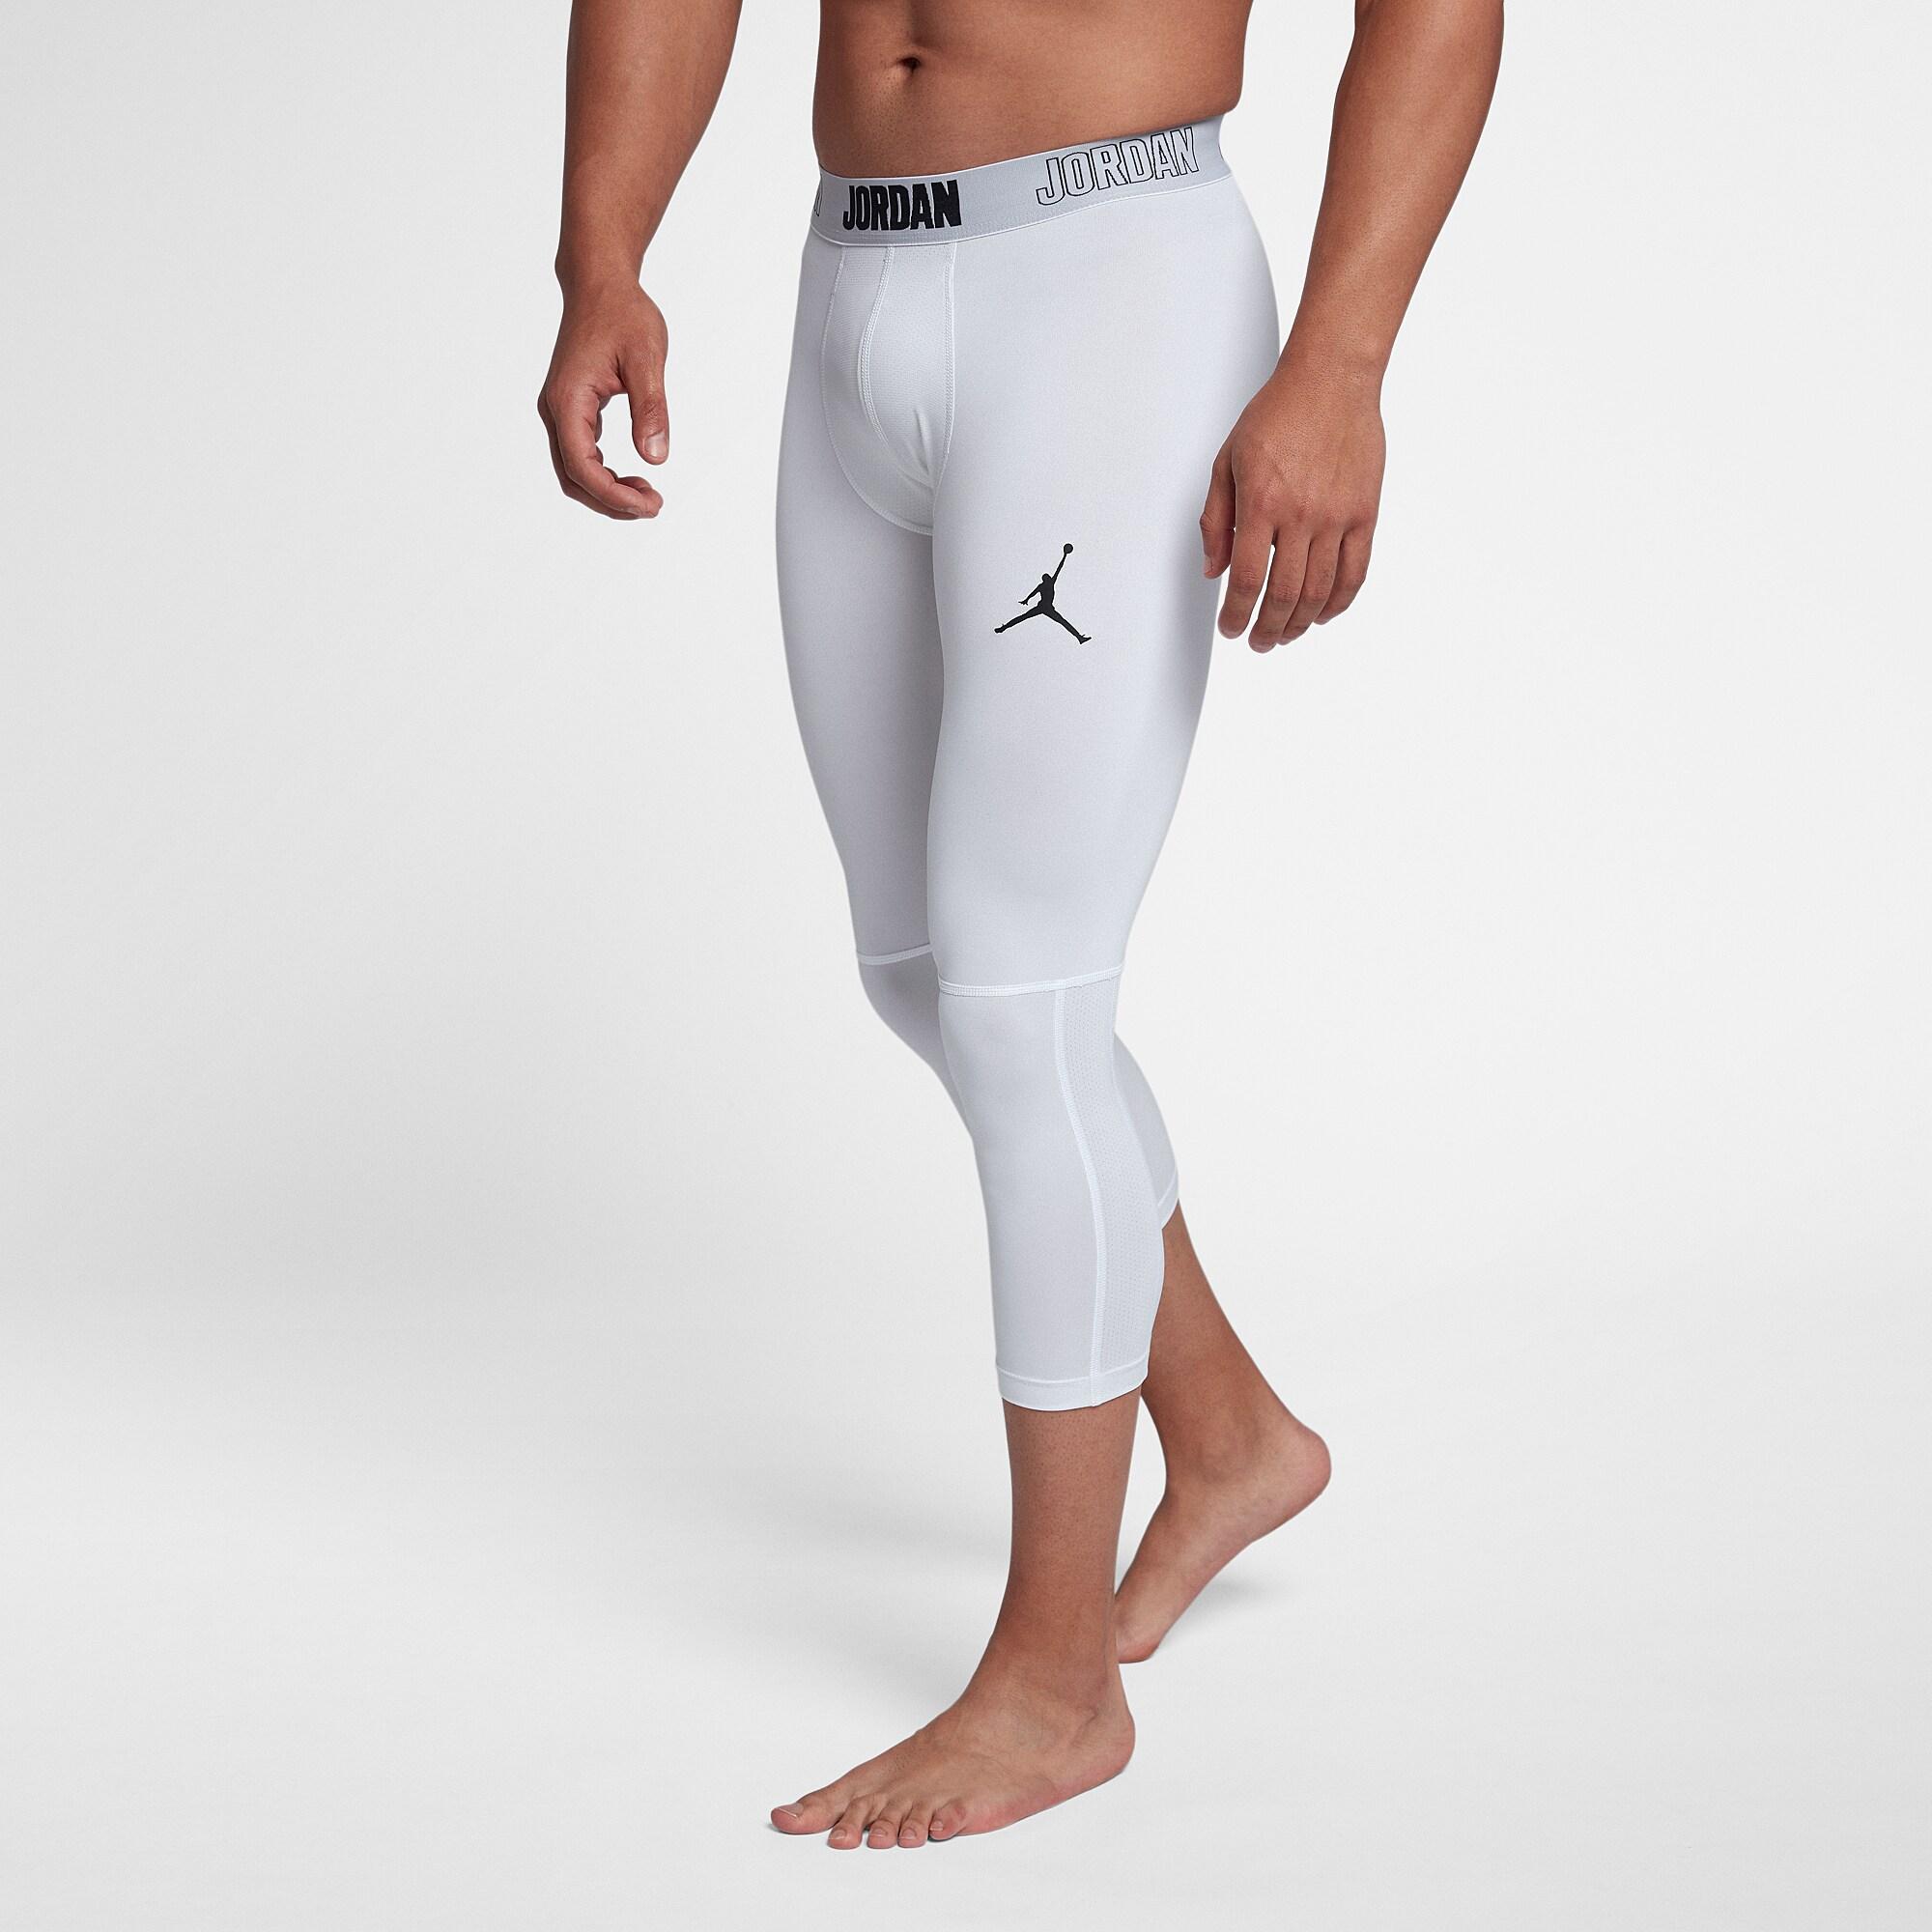 Nike Jordan Dri-fit 23 Alpha 3/4 Training Tights in White/Black (White) for  Men - Lyst